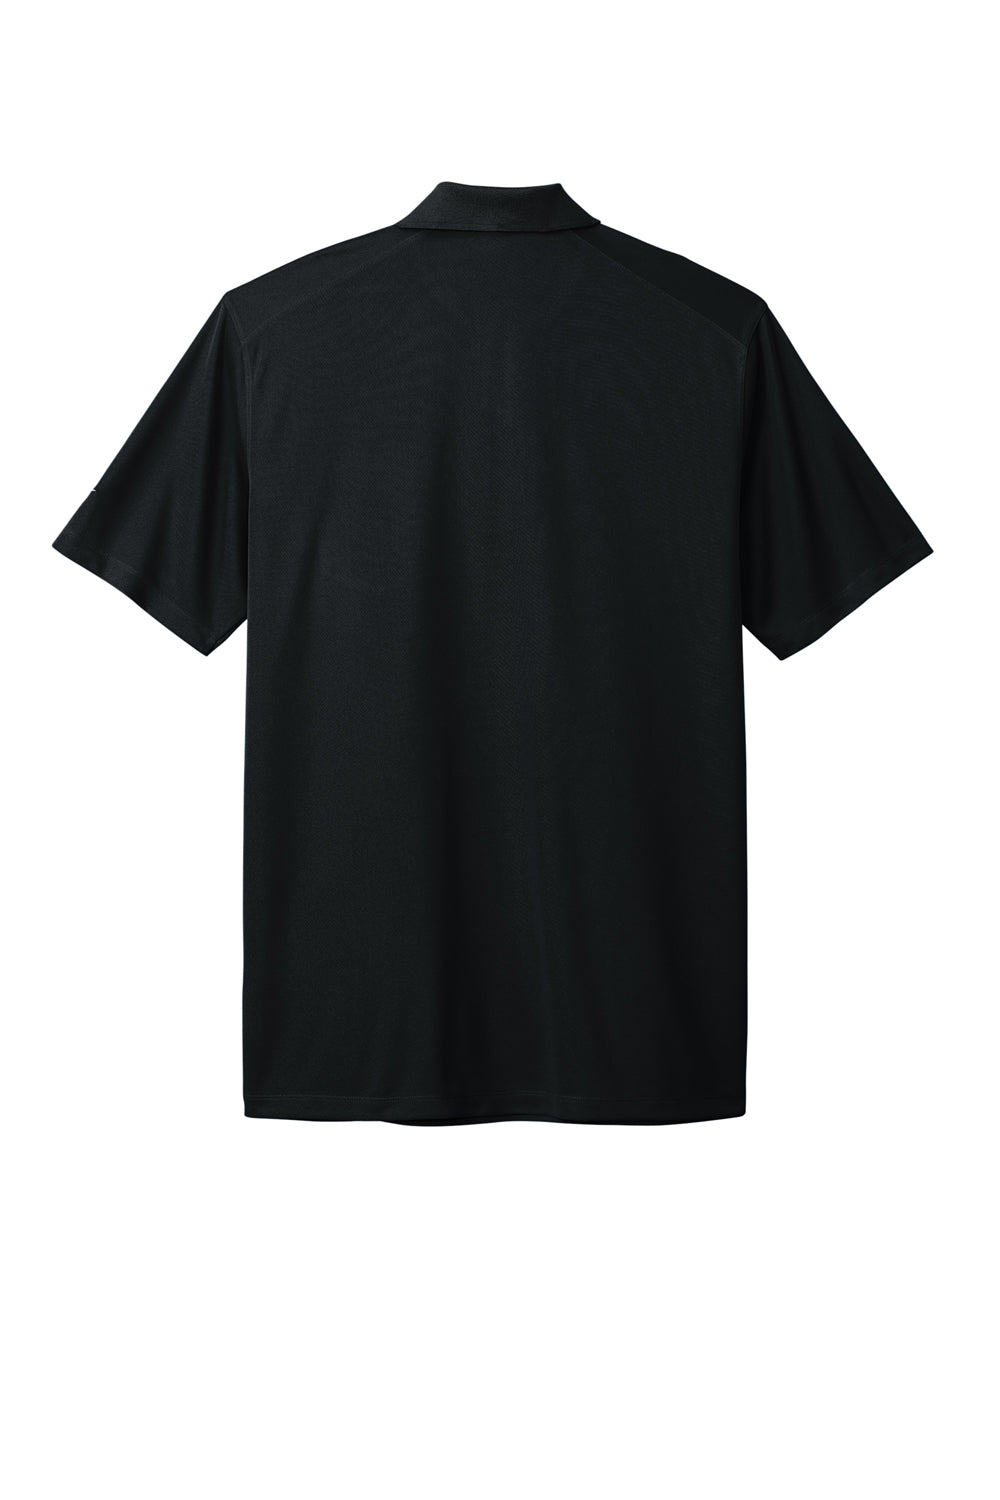 Nike NKDC2103 Mens Dri-Fit Moisture Wicking Micro Pique 2.0 Short Sleeve Polo Shirt w/ Pocket Black Flat Back